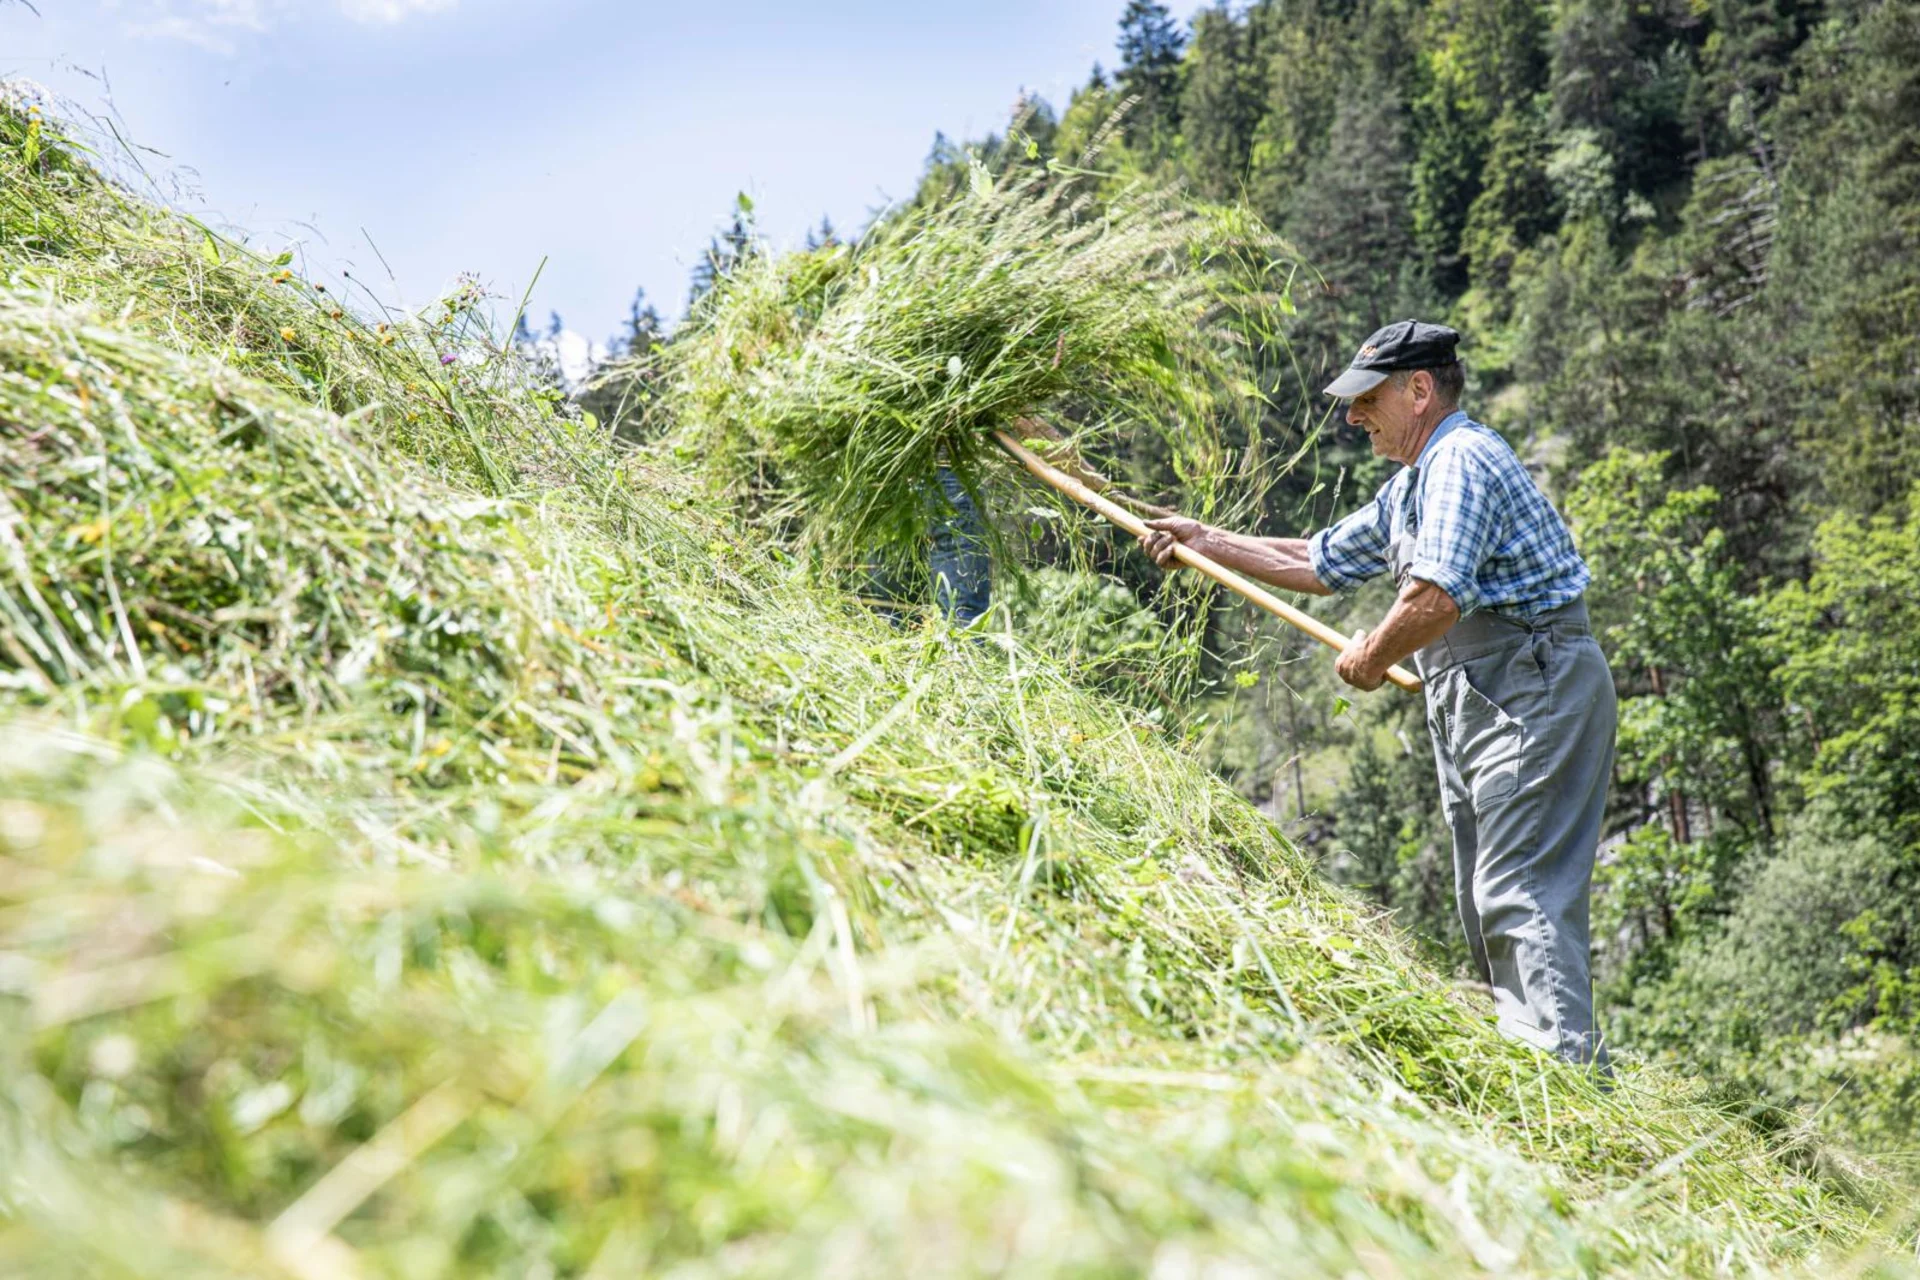 A farmer haymaking in a steep meadow